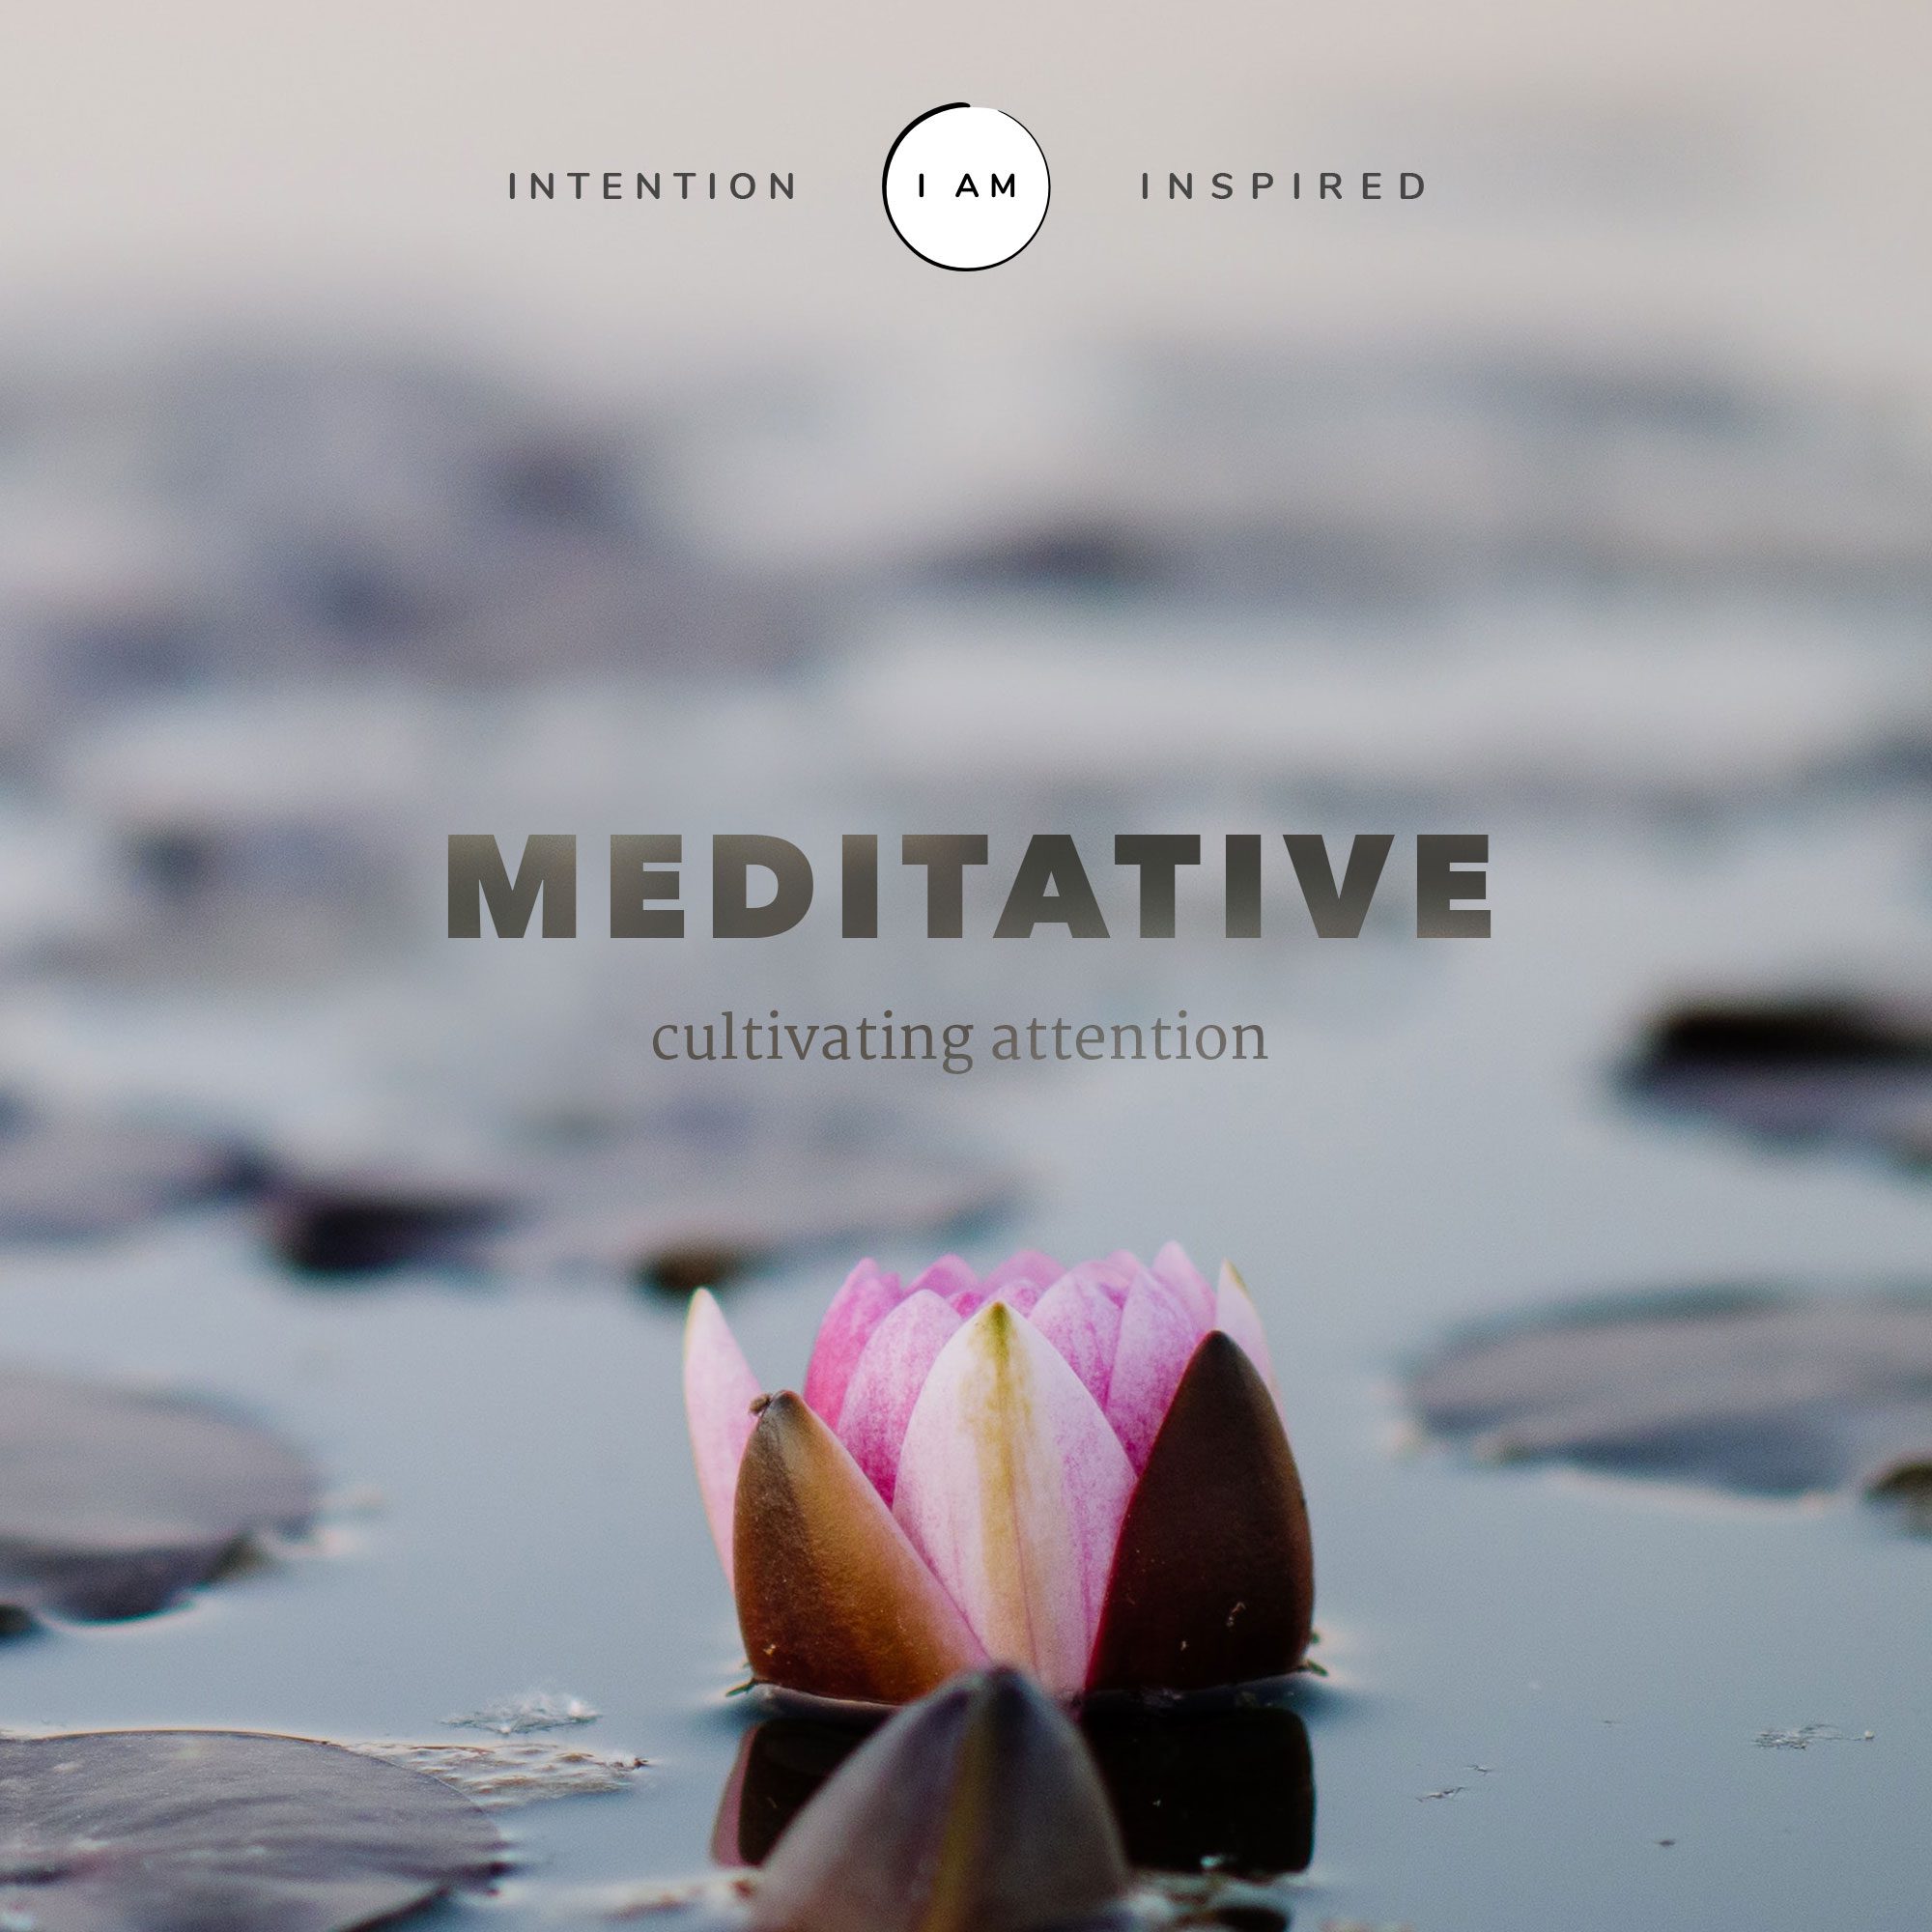 MEDITATIVE - cultivating attention